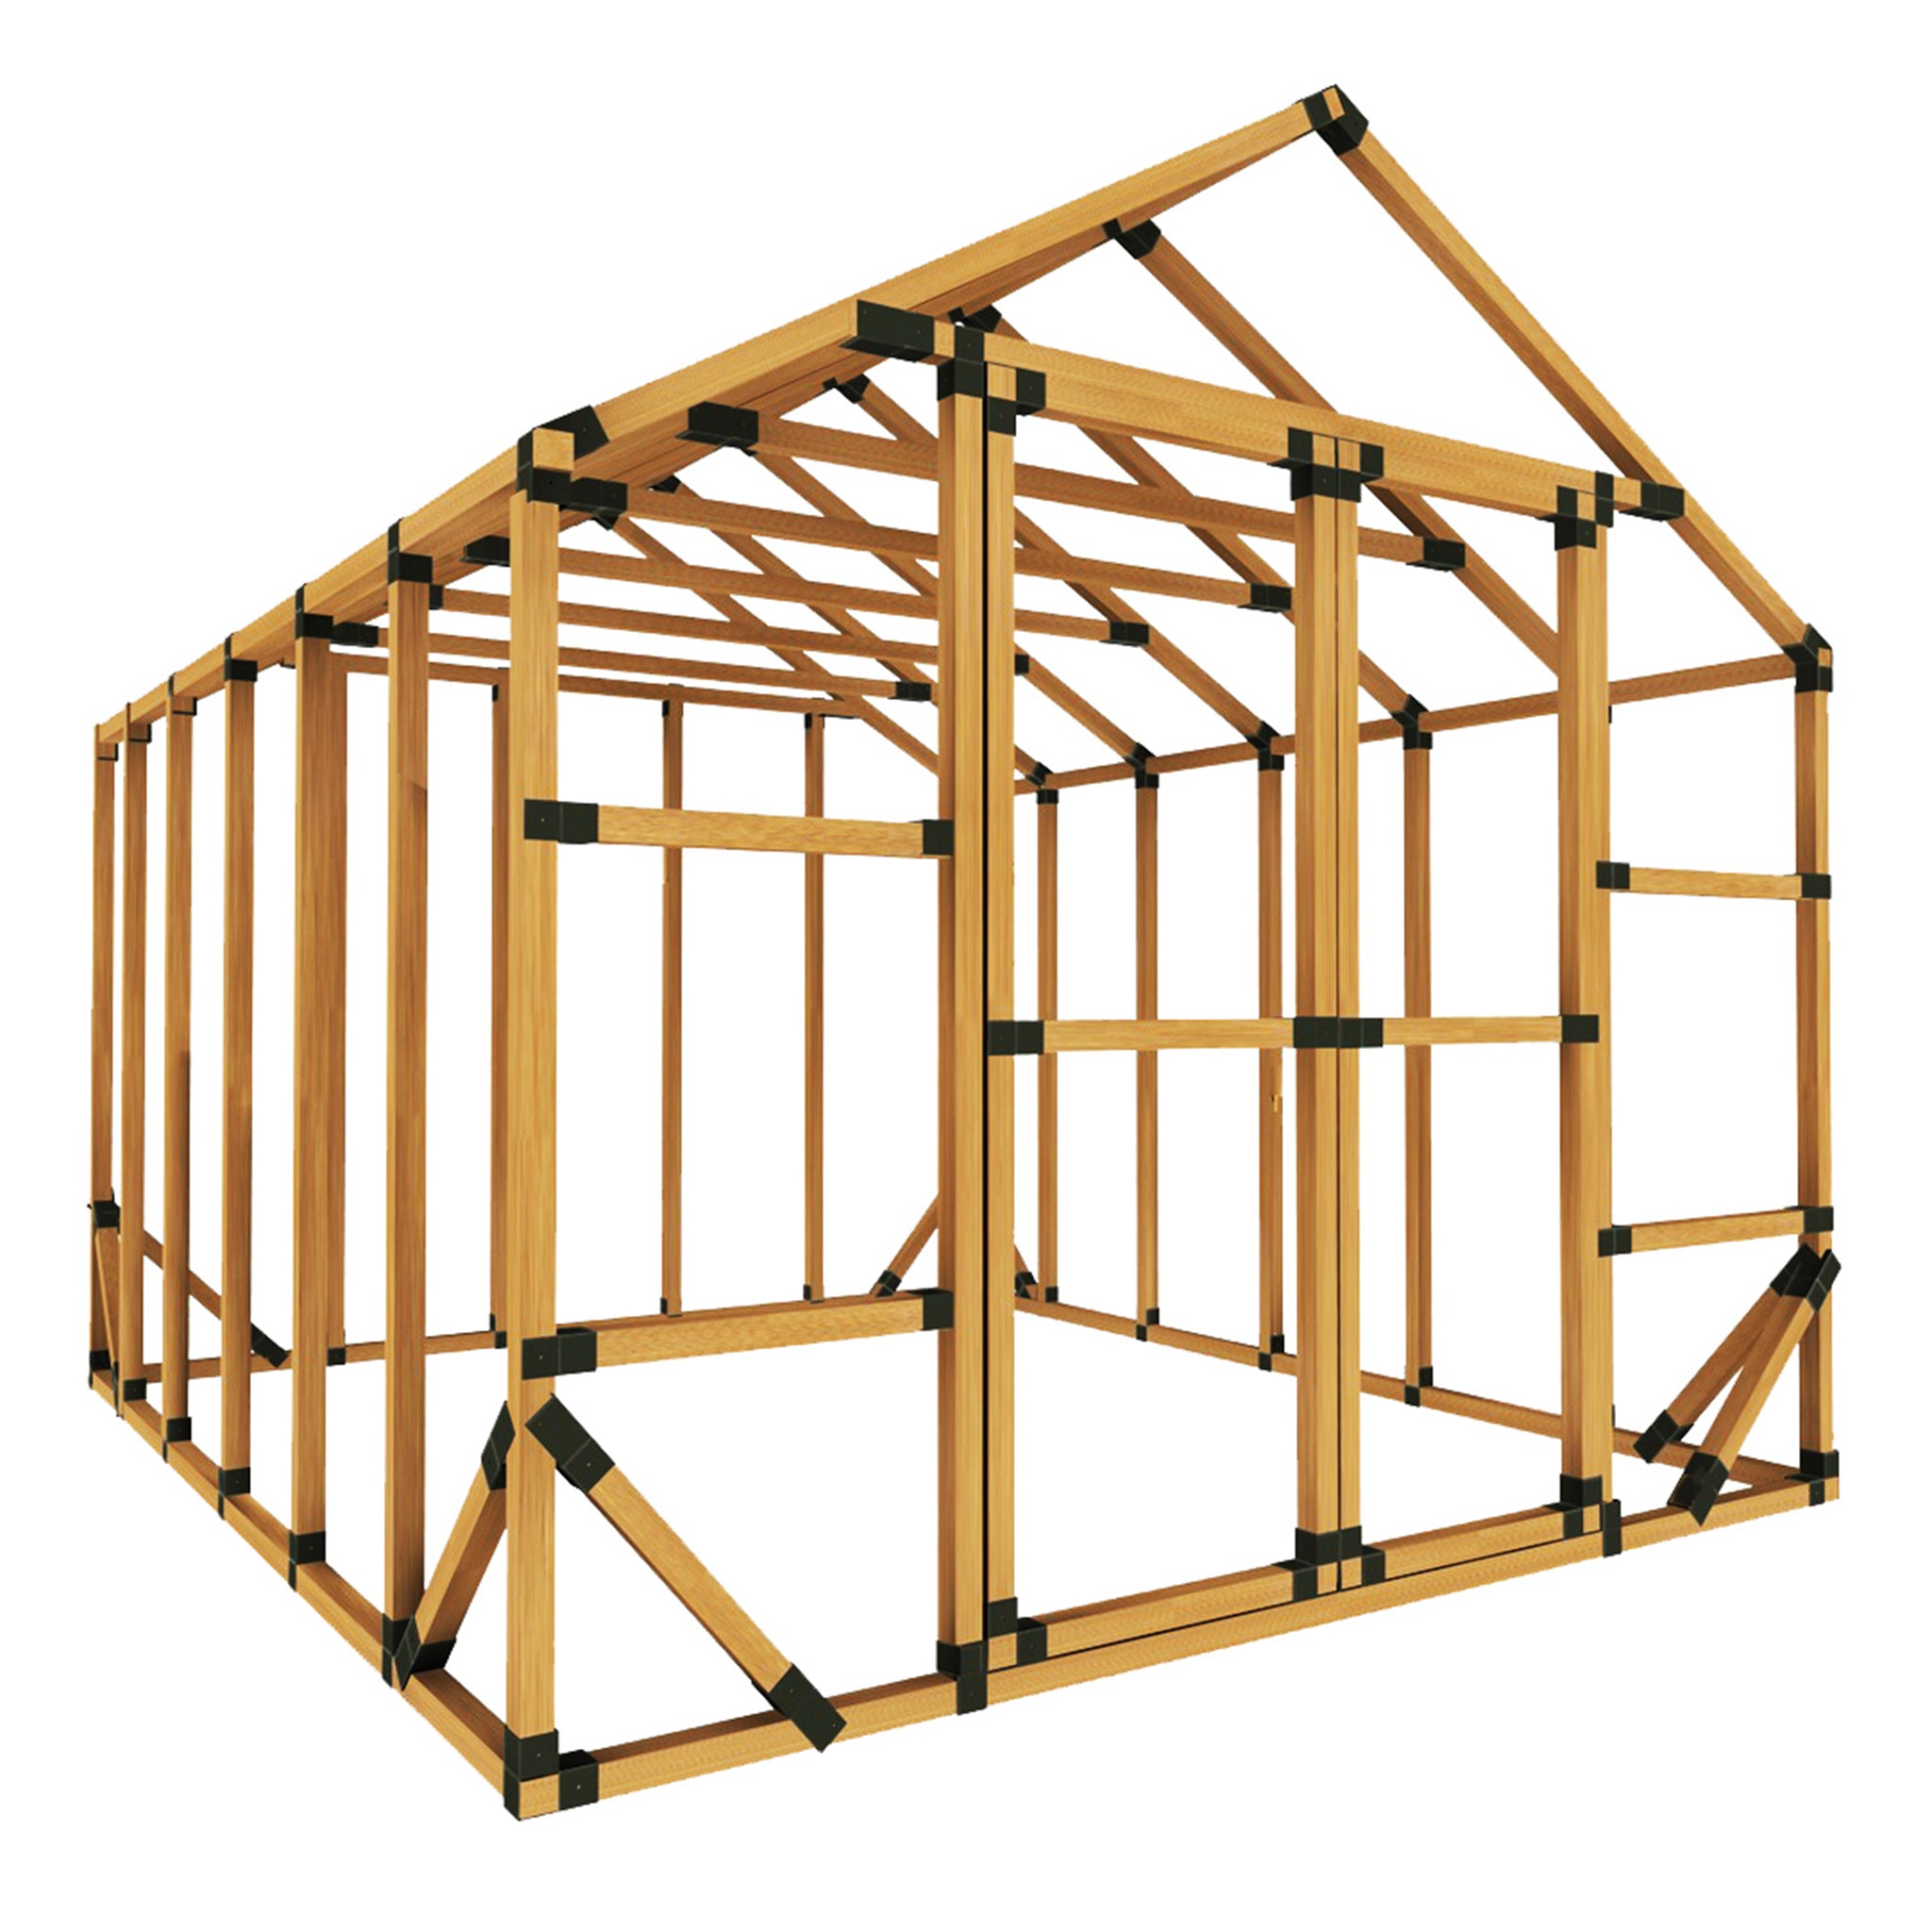 10x12 standard chicken run kit - e-z frame structures